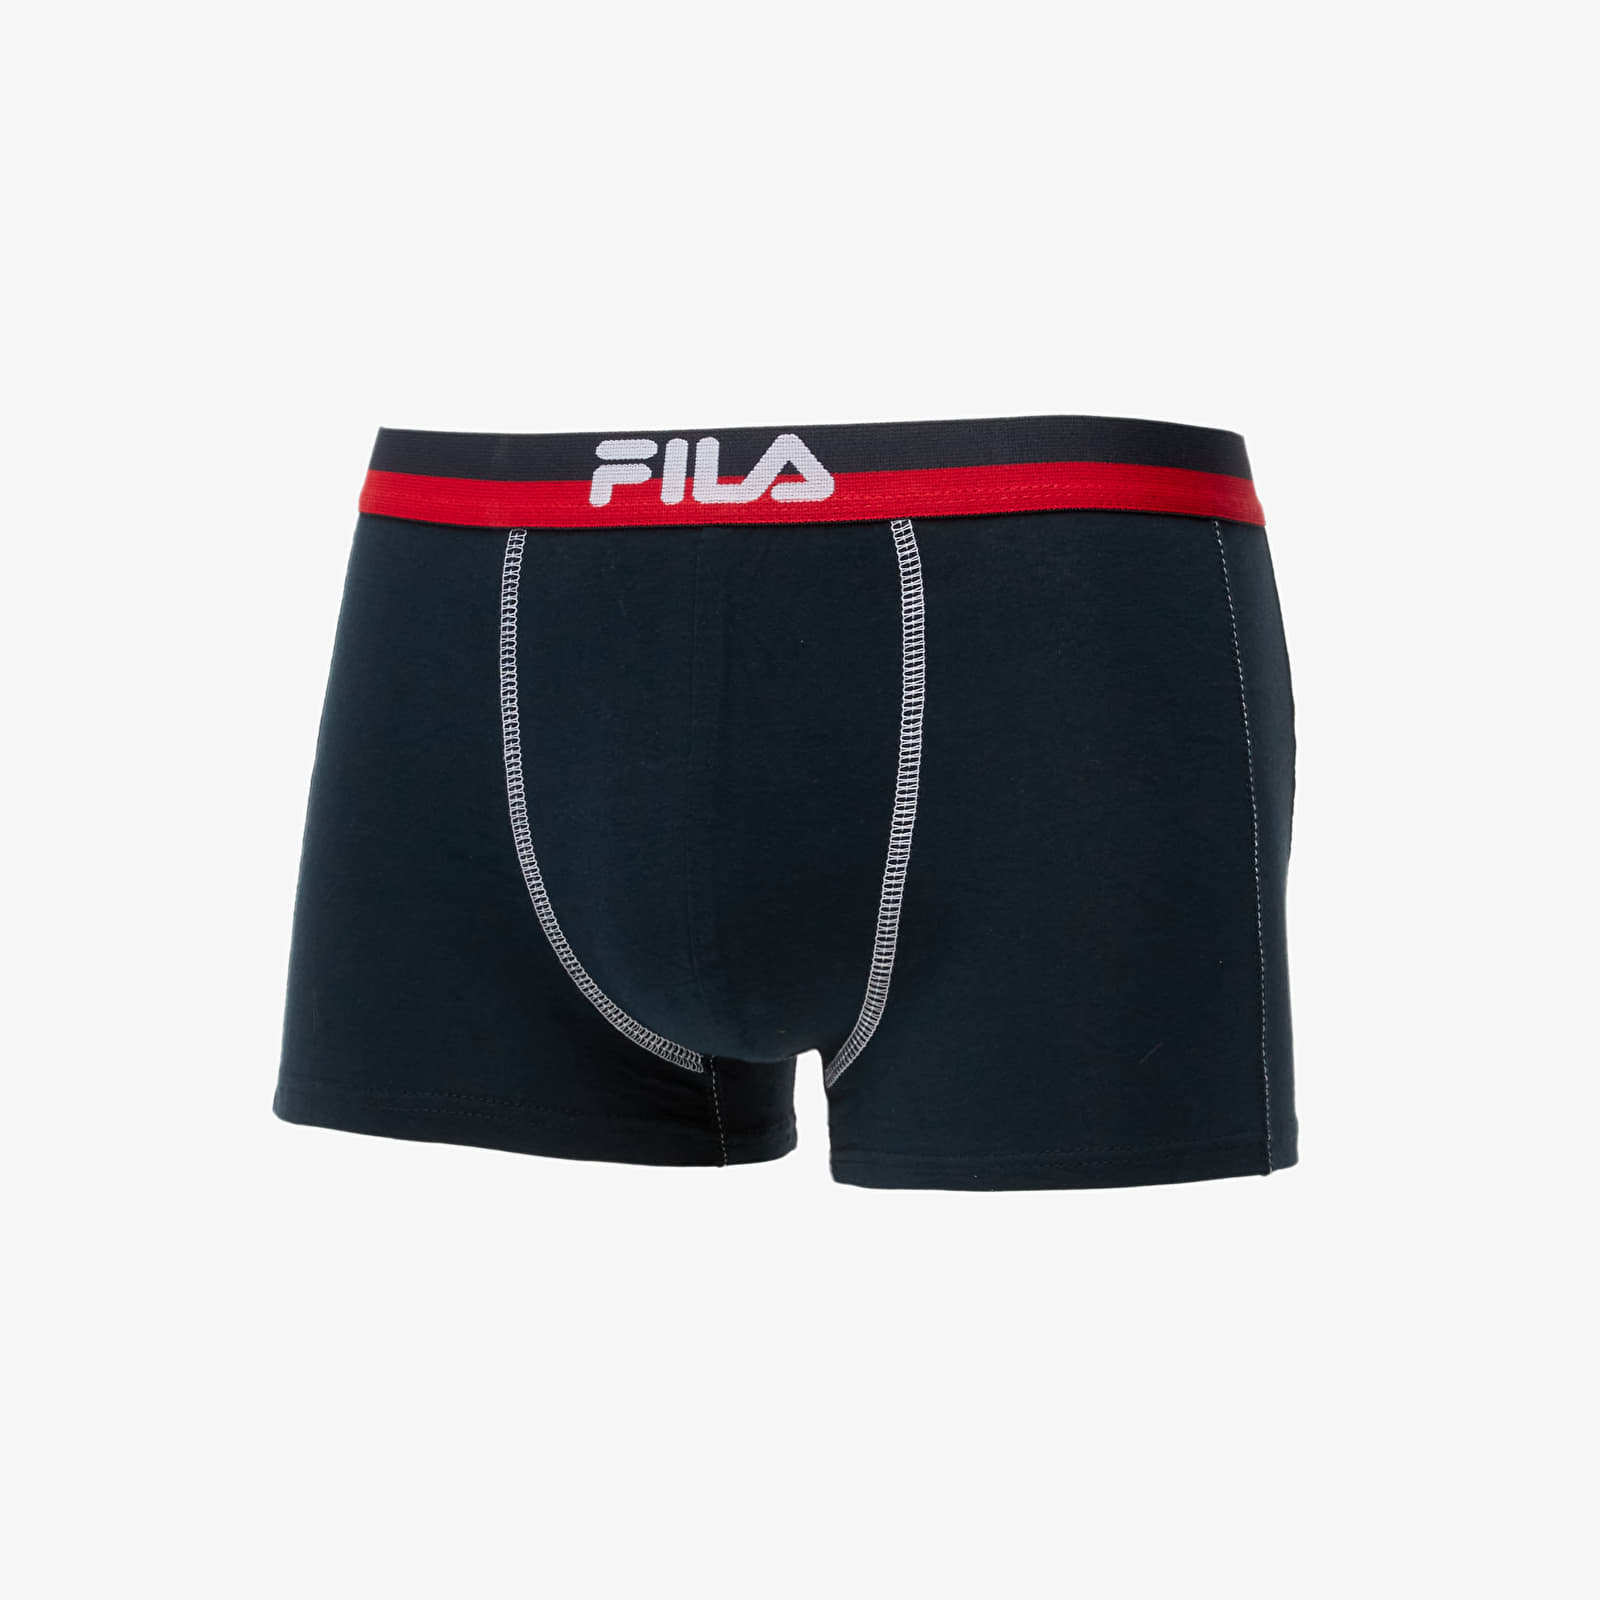 Men's underwear FILA 2 Pack Boxers Navy